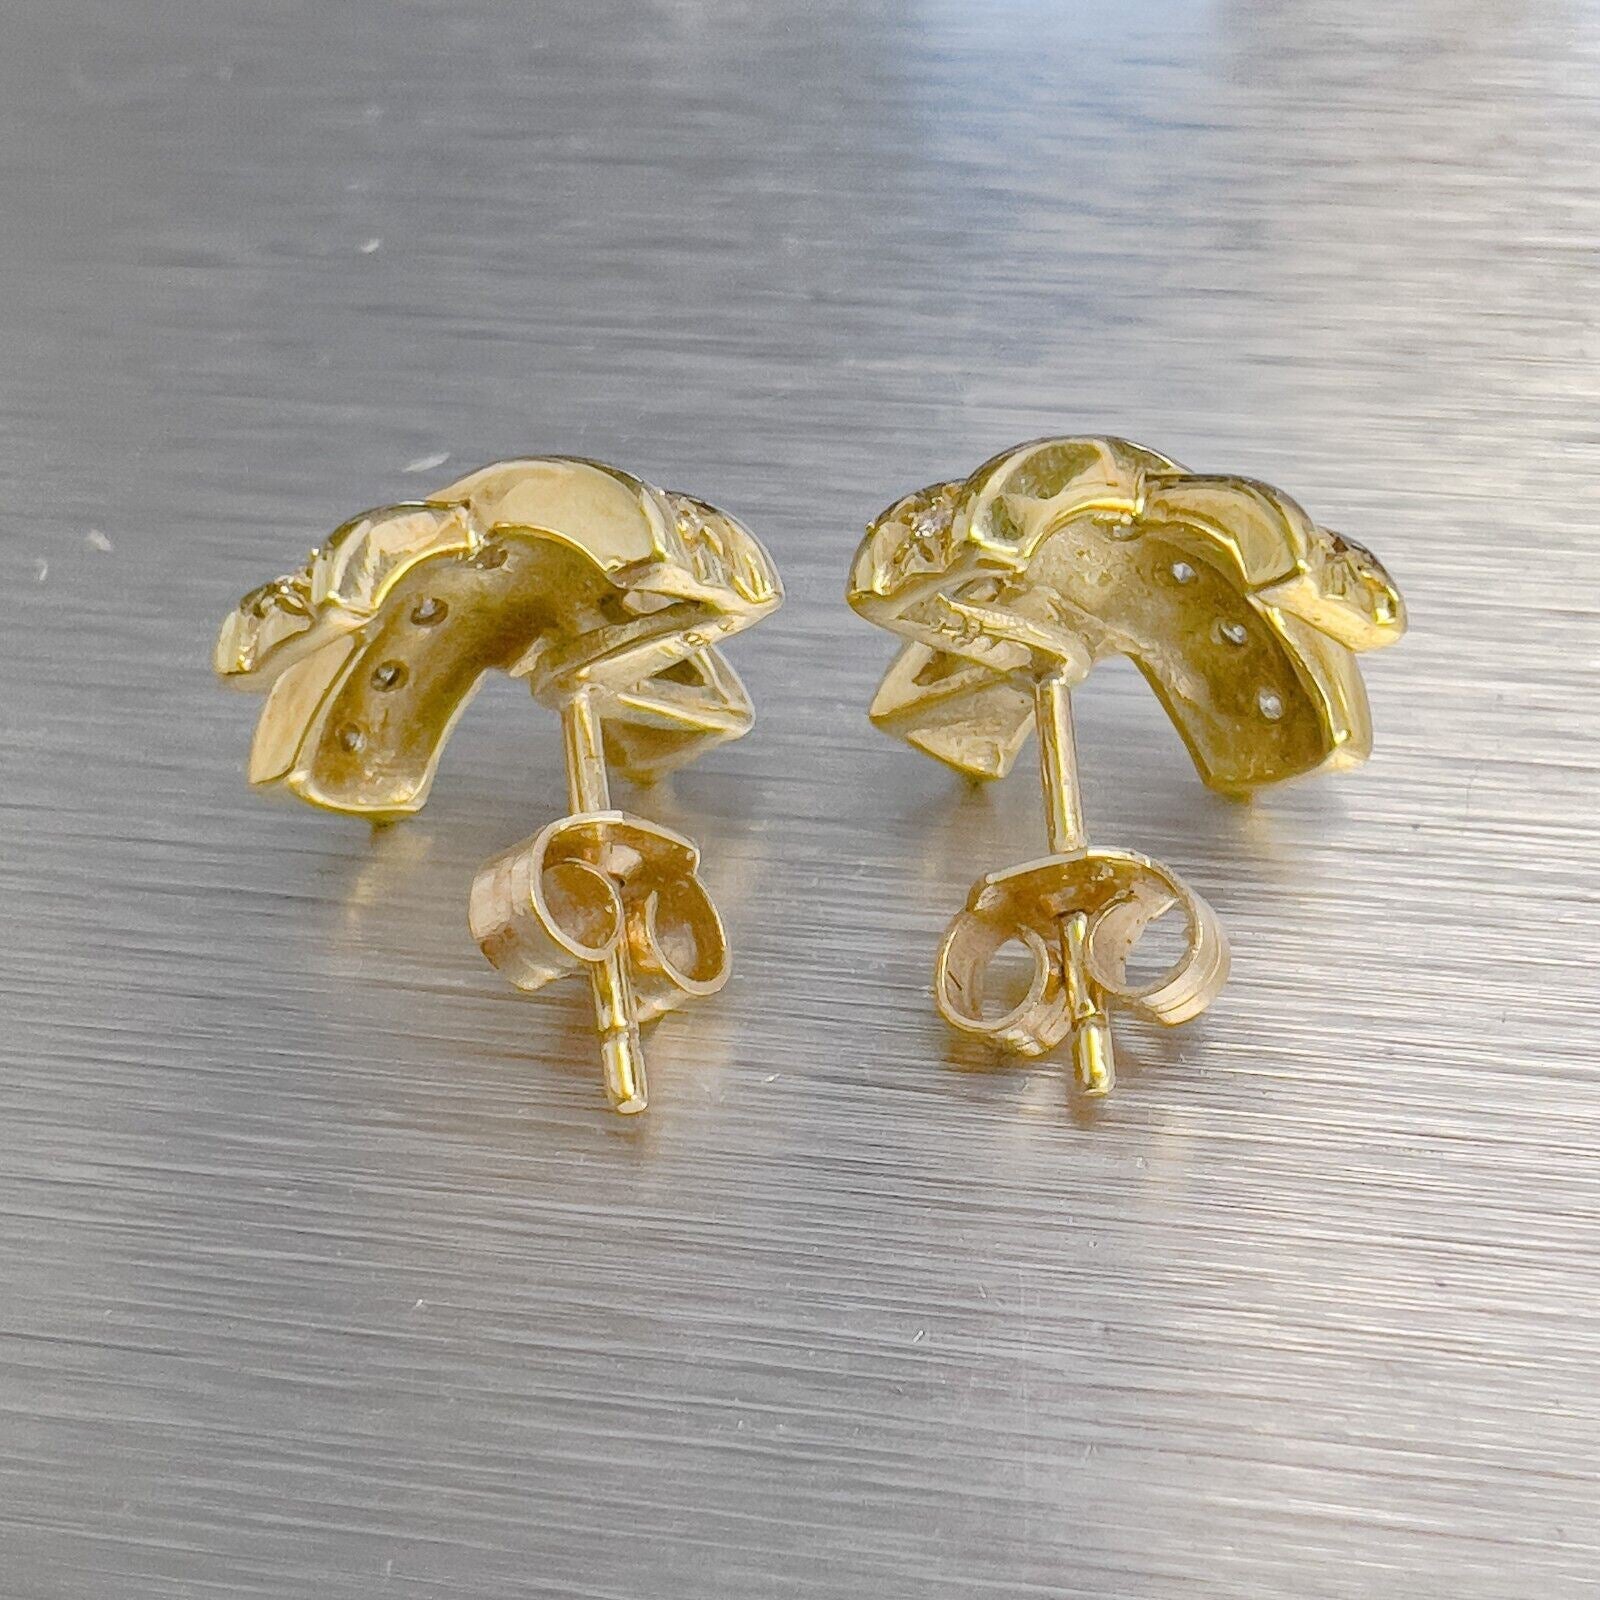 18k Yellow Gold Diamond Curved X Criss Cross Earrings 0.20ctw 5.3g VINTAGE